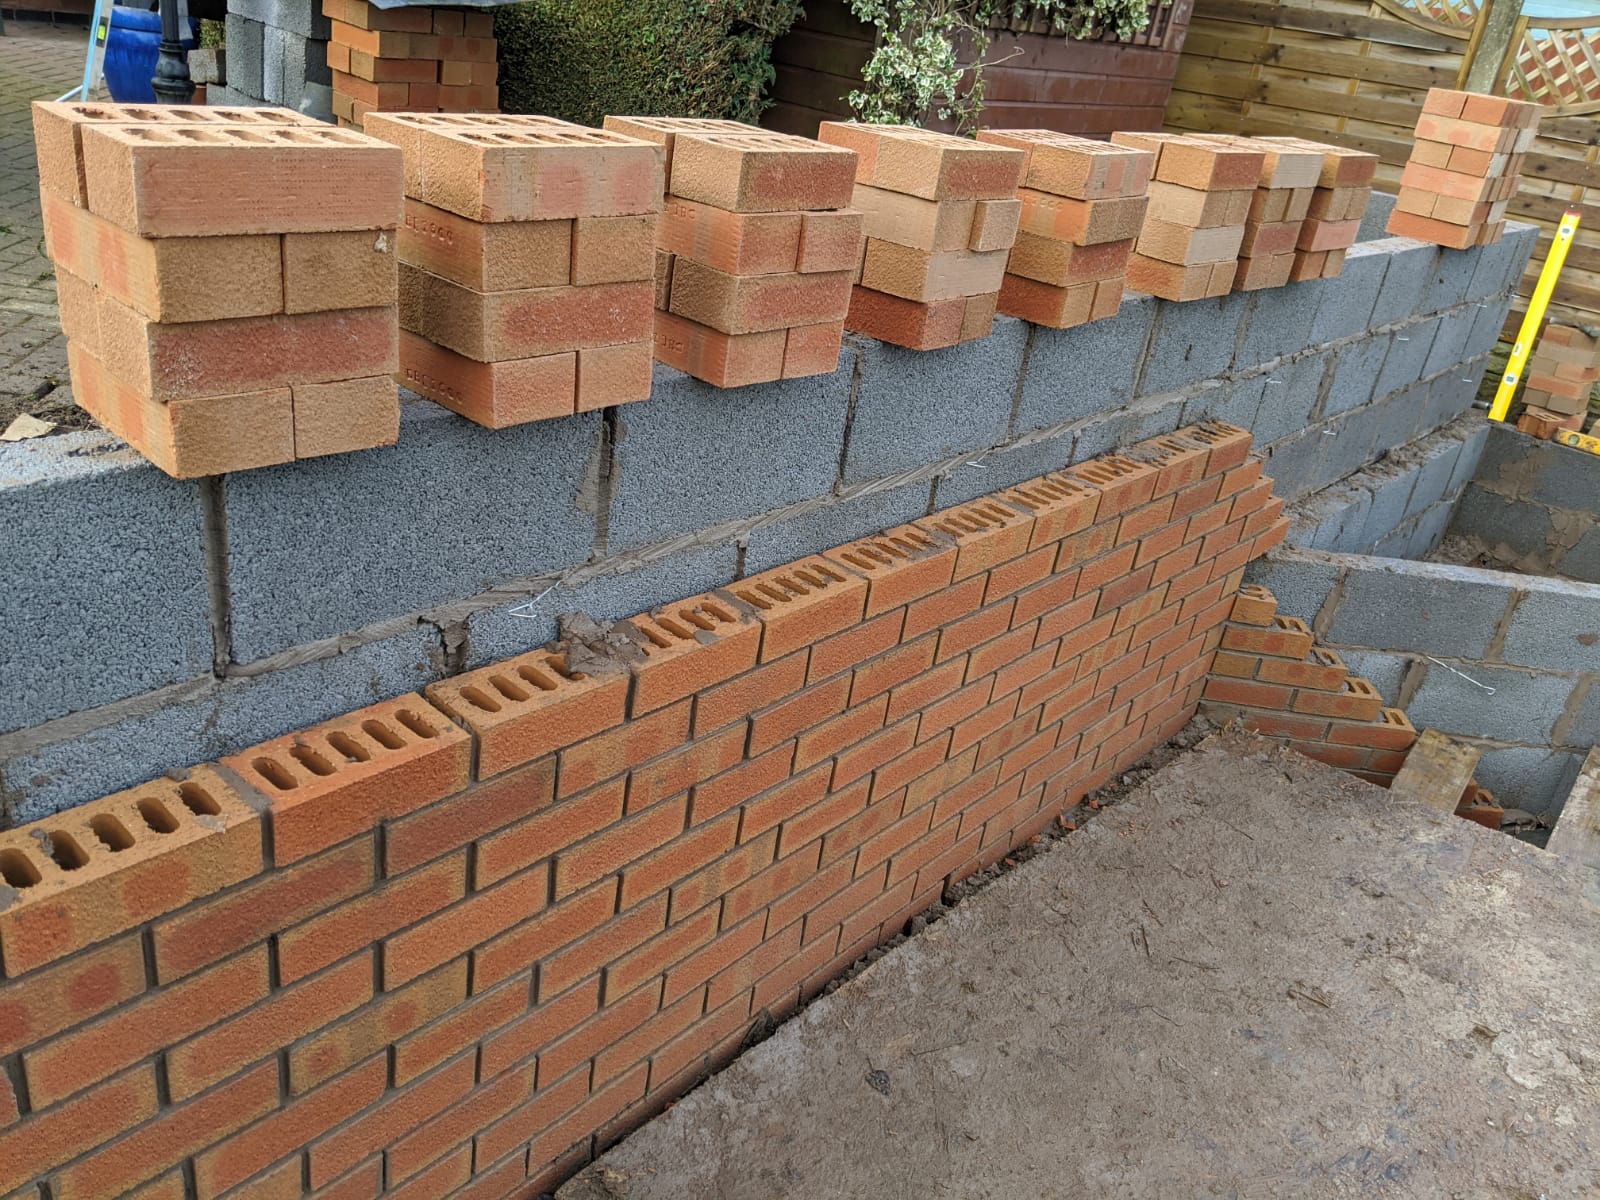 Bricks set out ready to lay